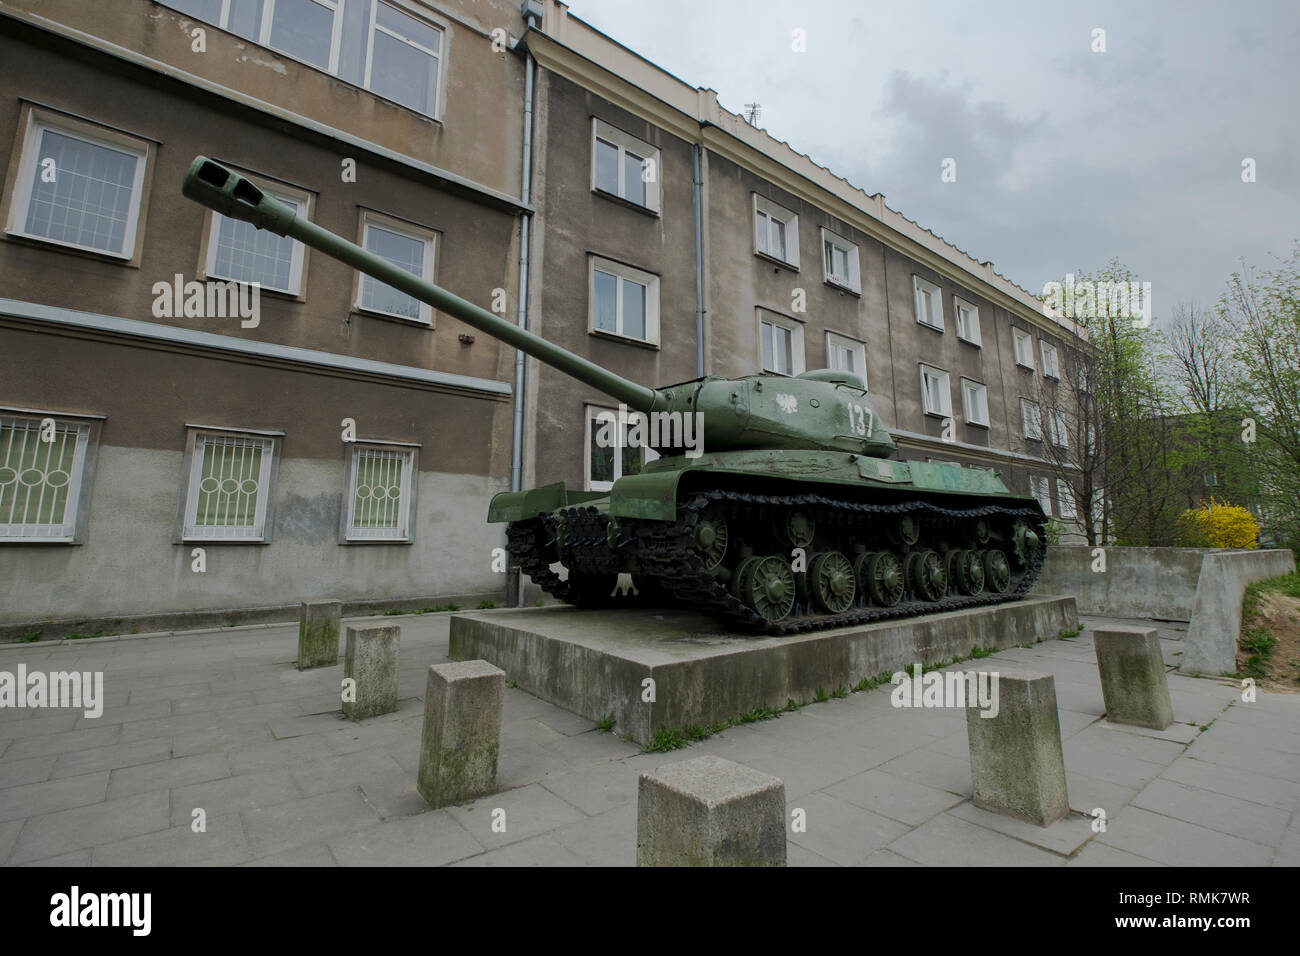 An old Soviet Tank in Nowa Huta, a pre-planned Socialist city in Krakow, Poland. Stock Photo